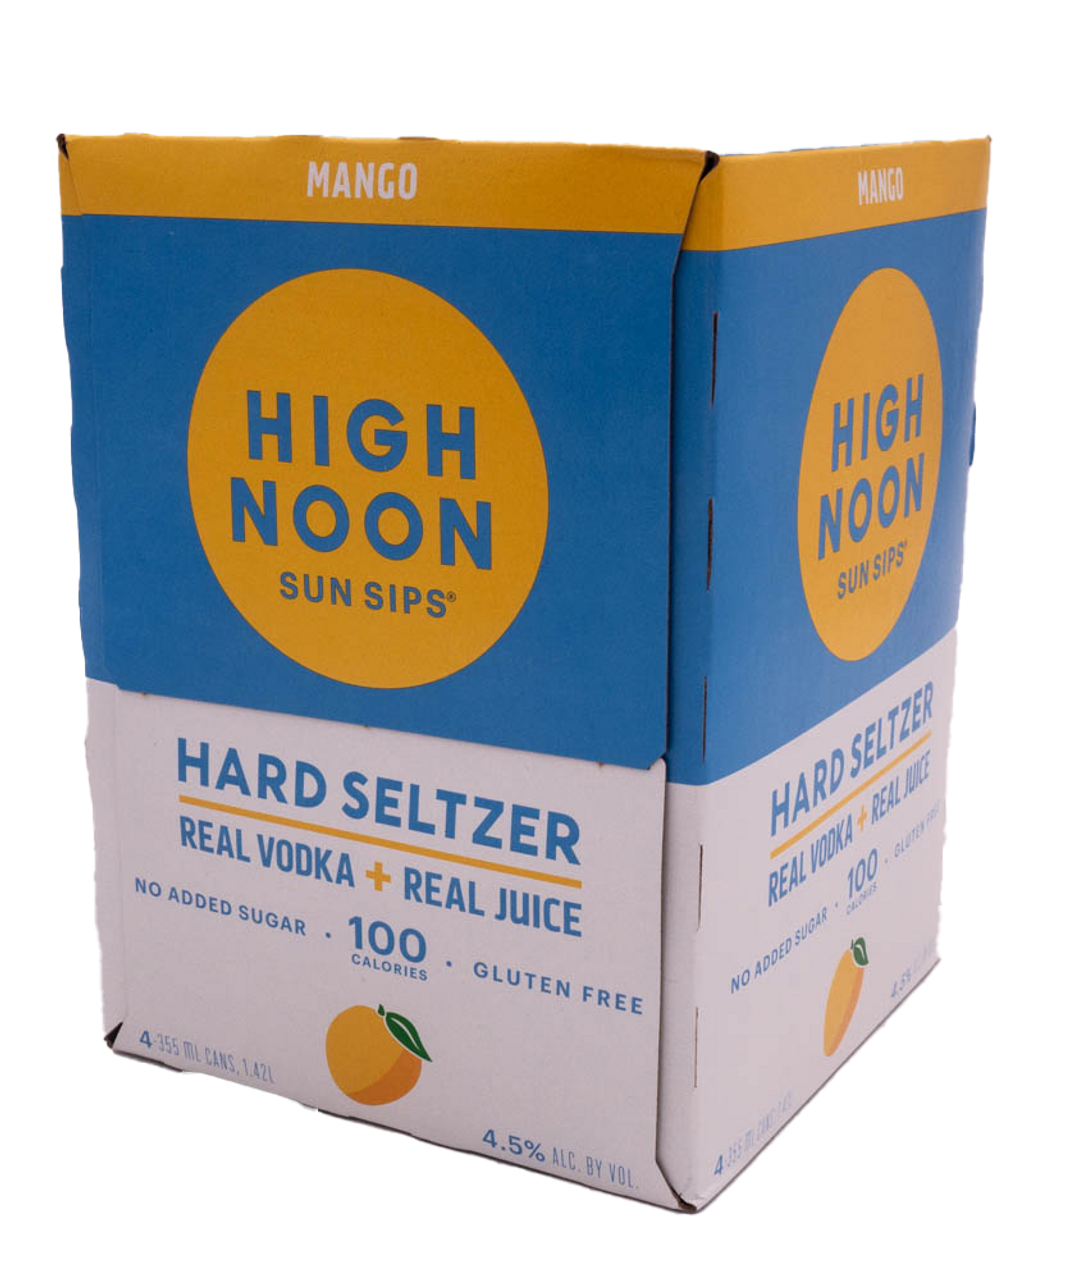 4 Pack of High Noon Mango